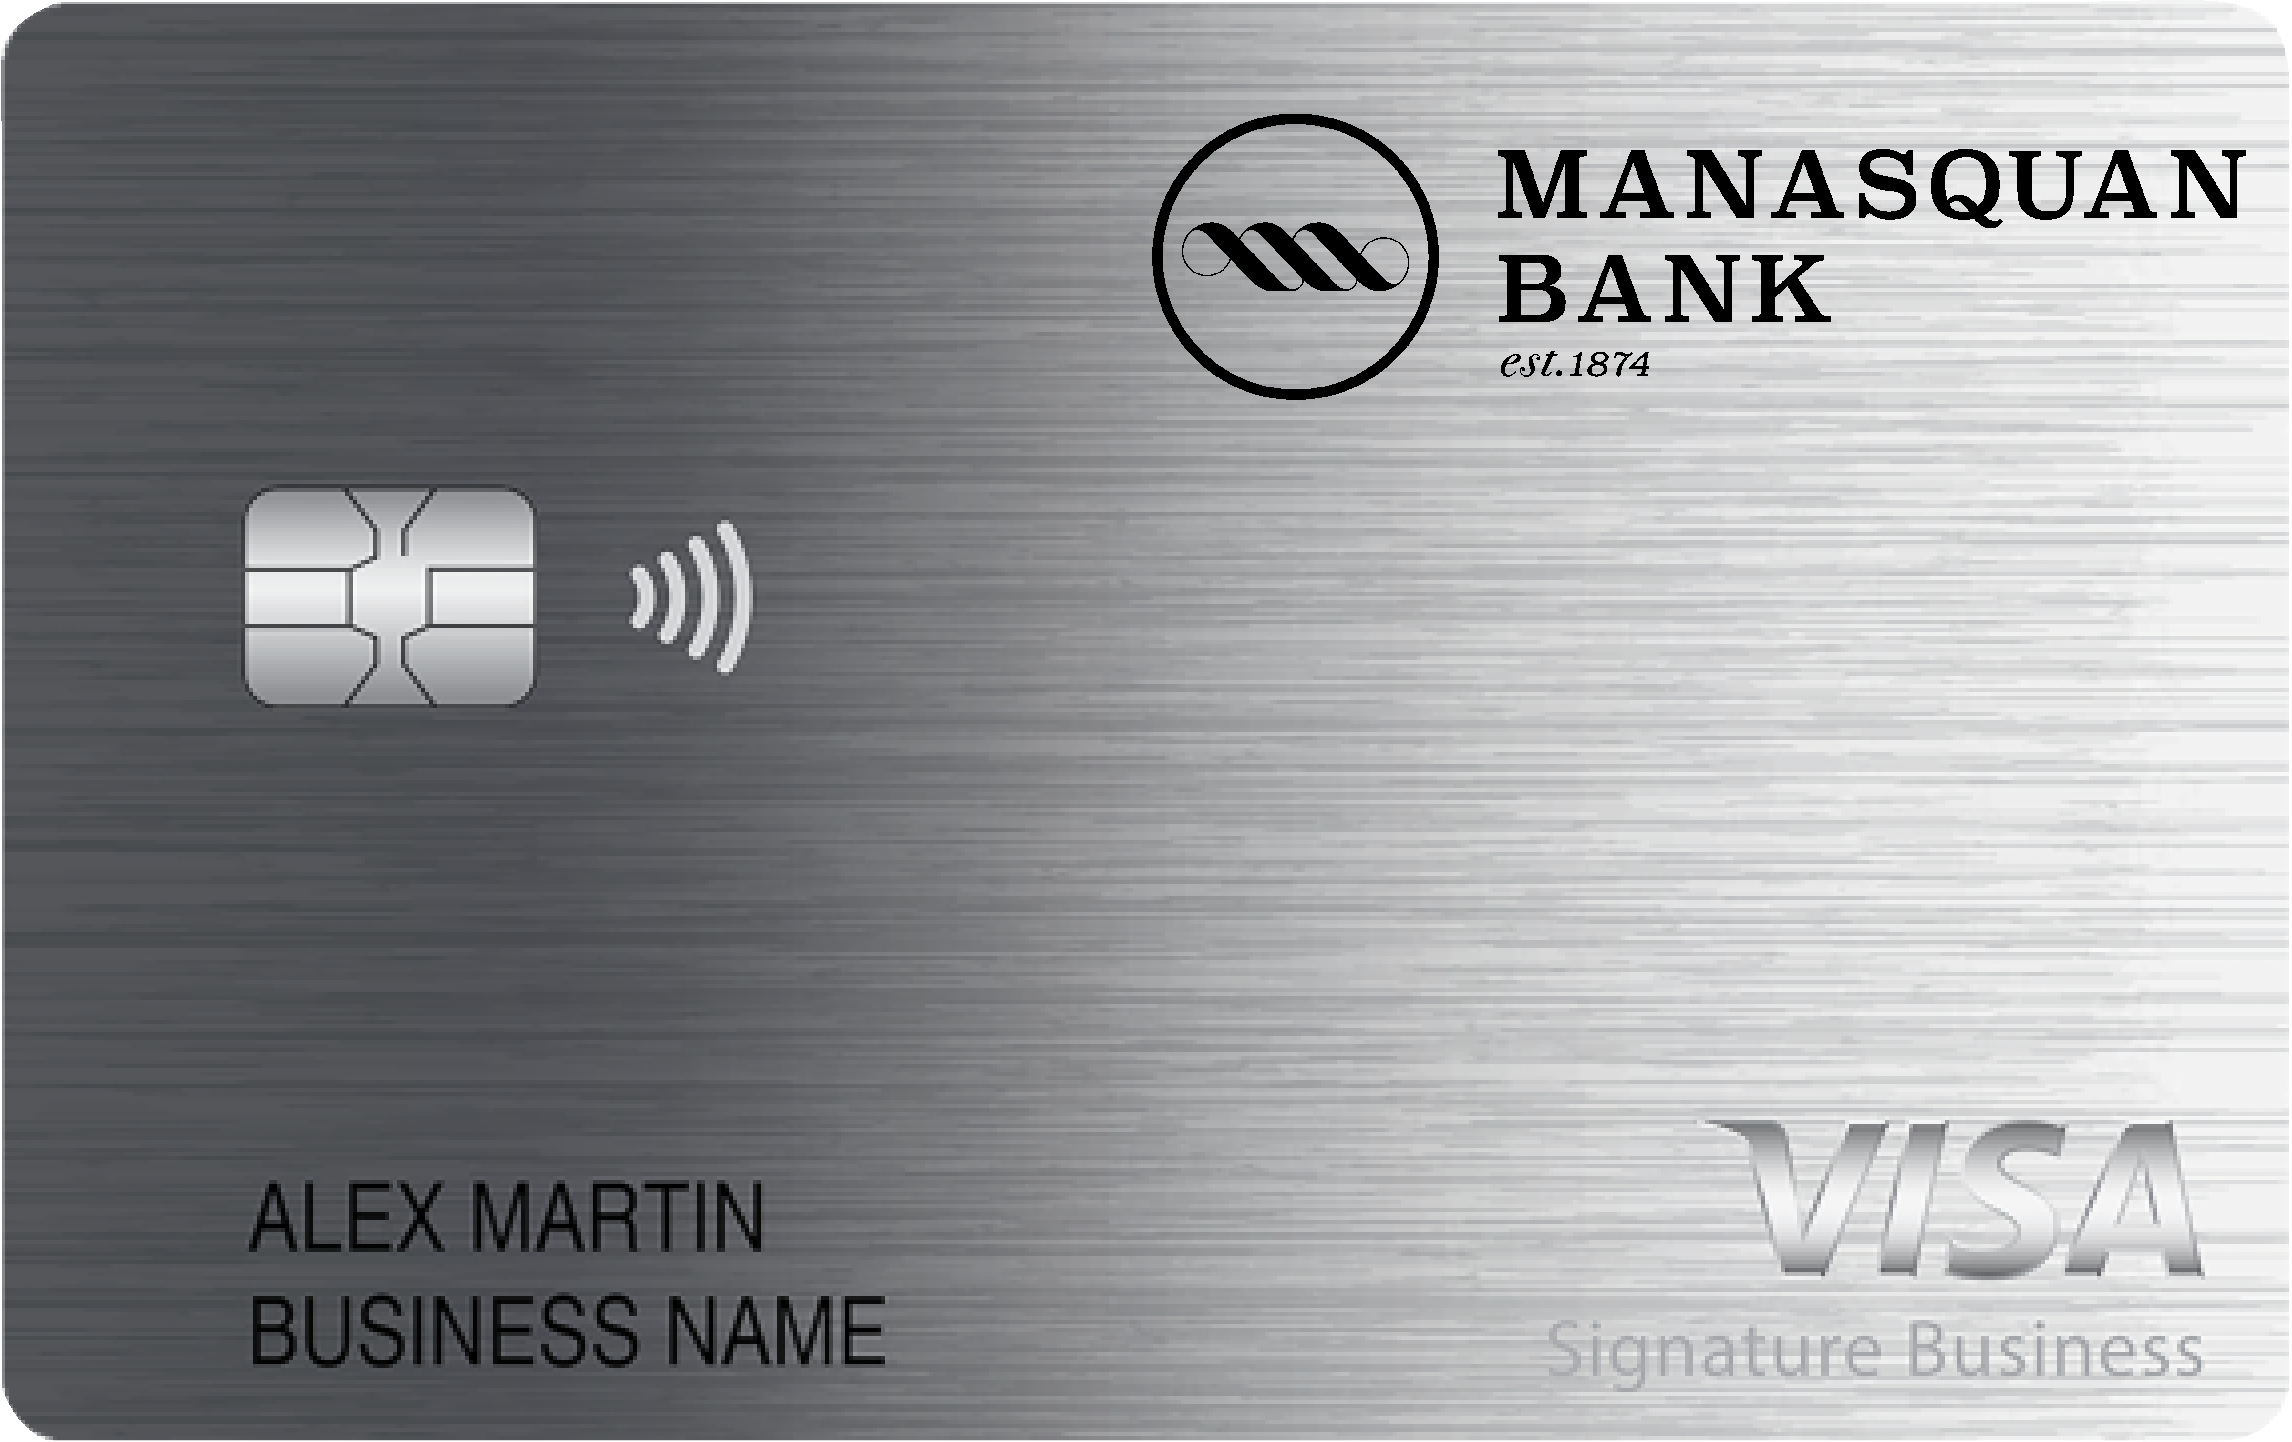 Manasquan Bank Smart Business Rewards Card